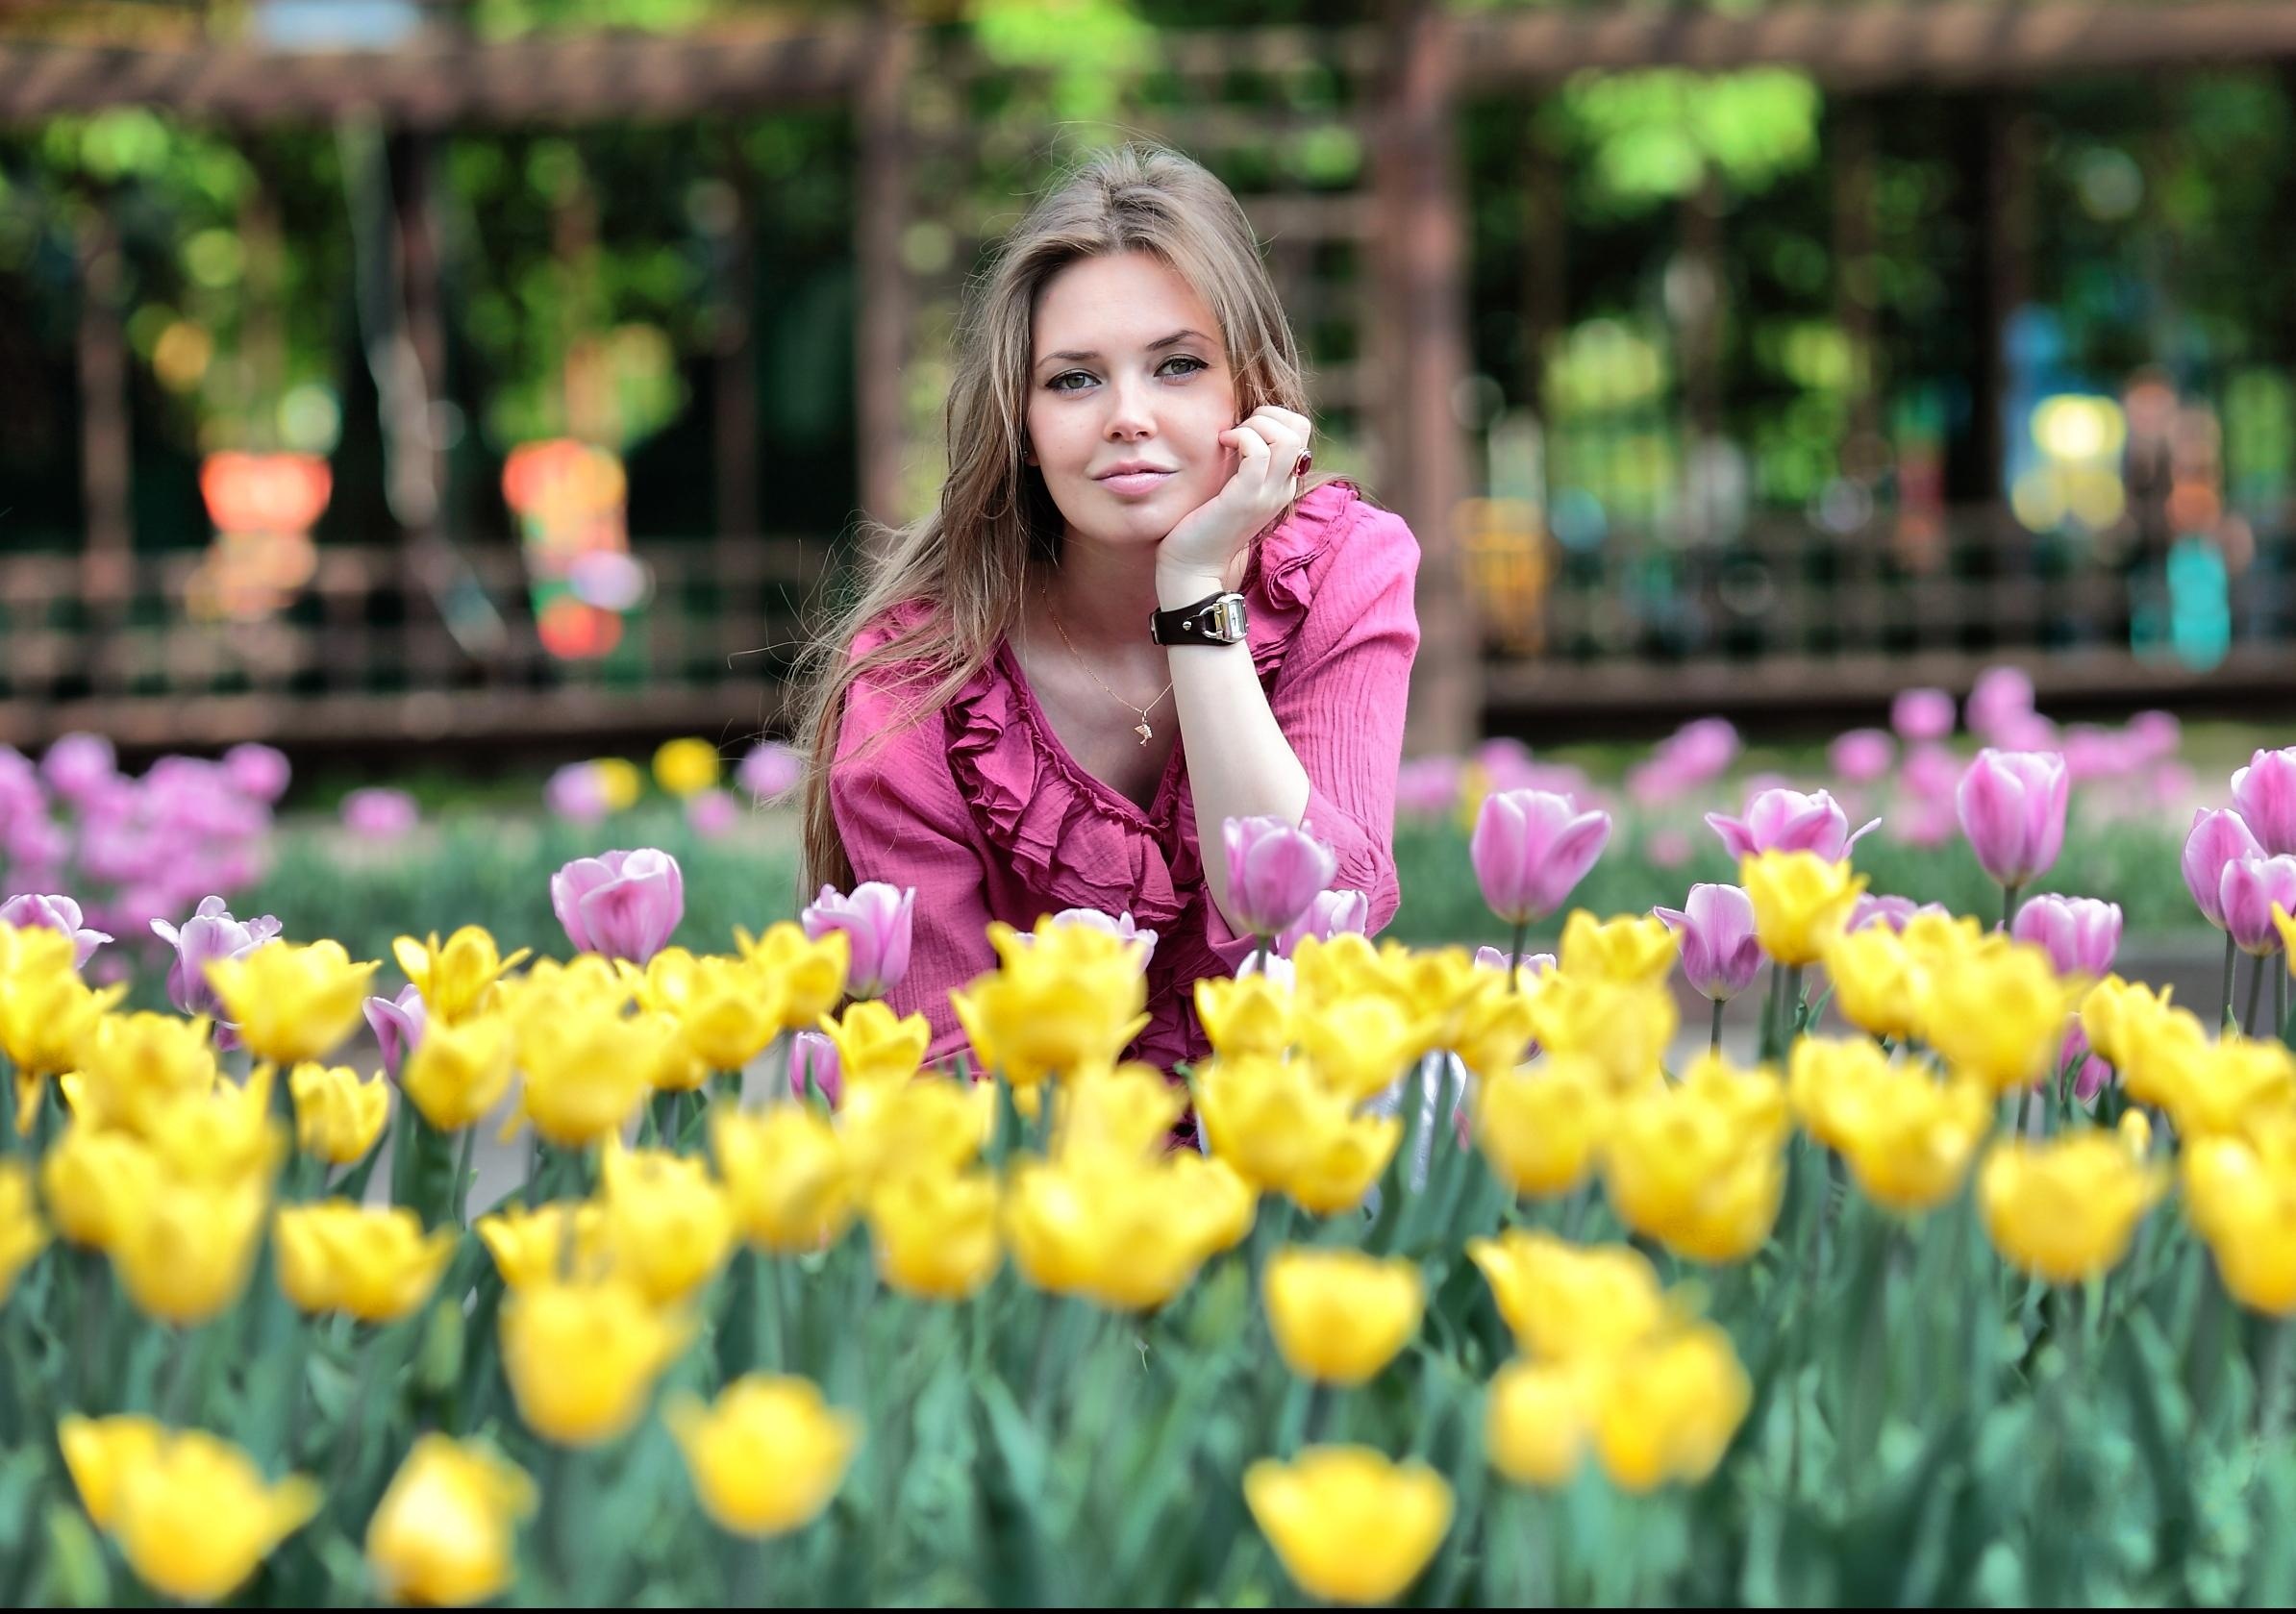 Фото с тюльпанами на улице. Женщина с тюльпанами. Фотосессия с тюльпанами. Букет цветов для девушки.